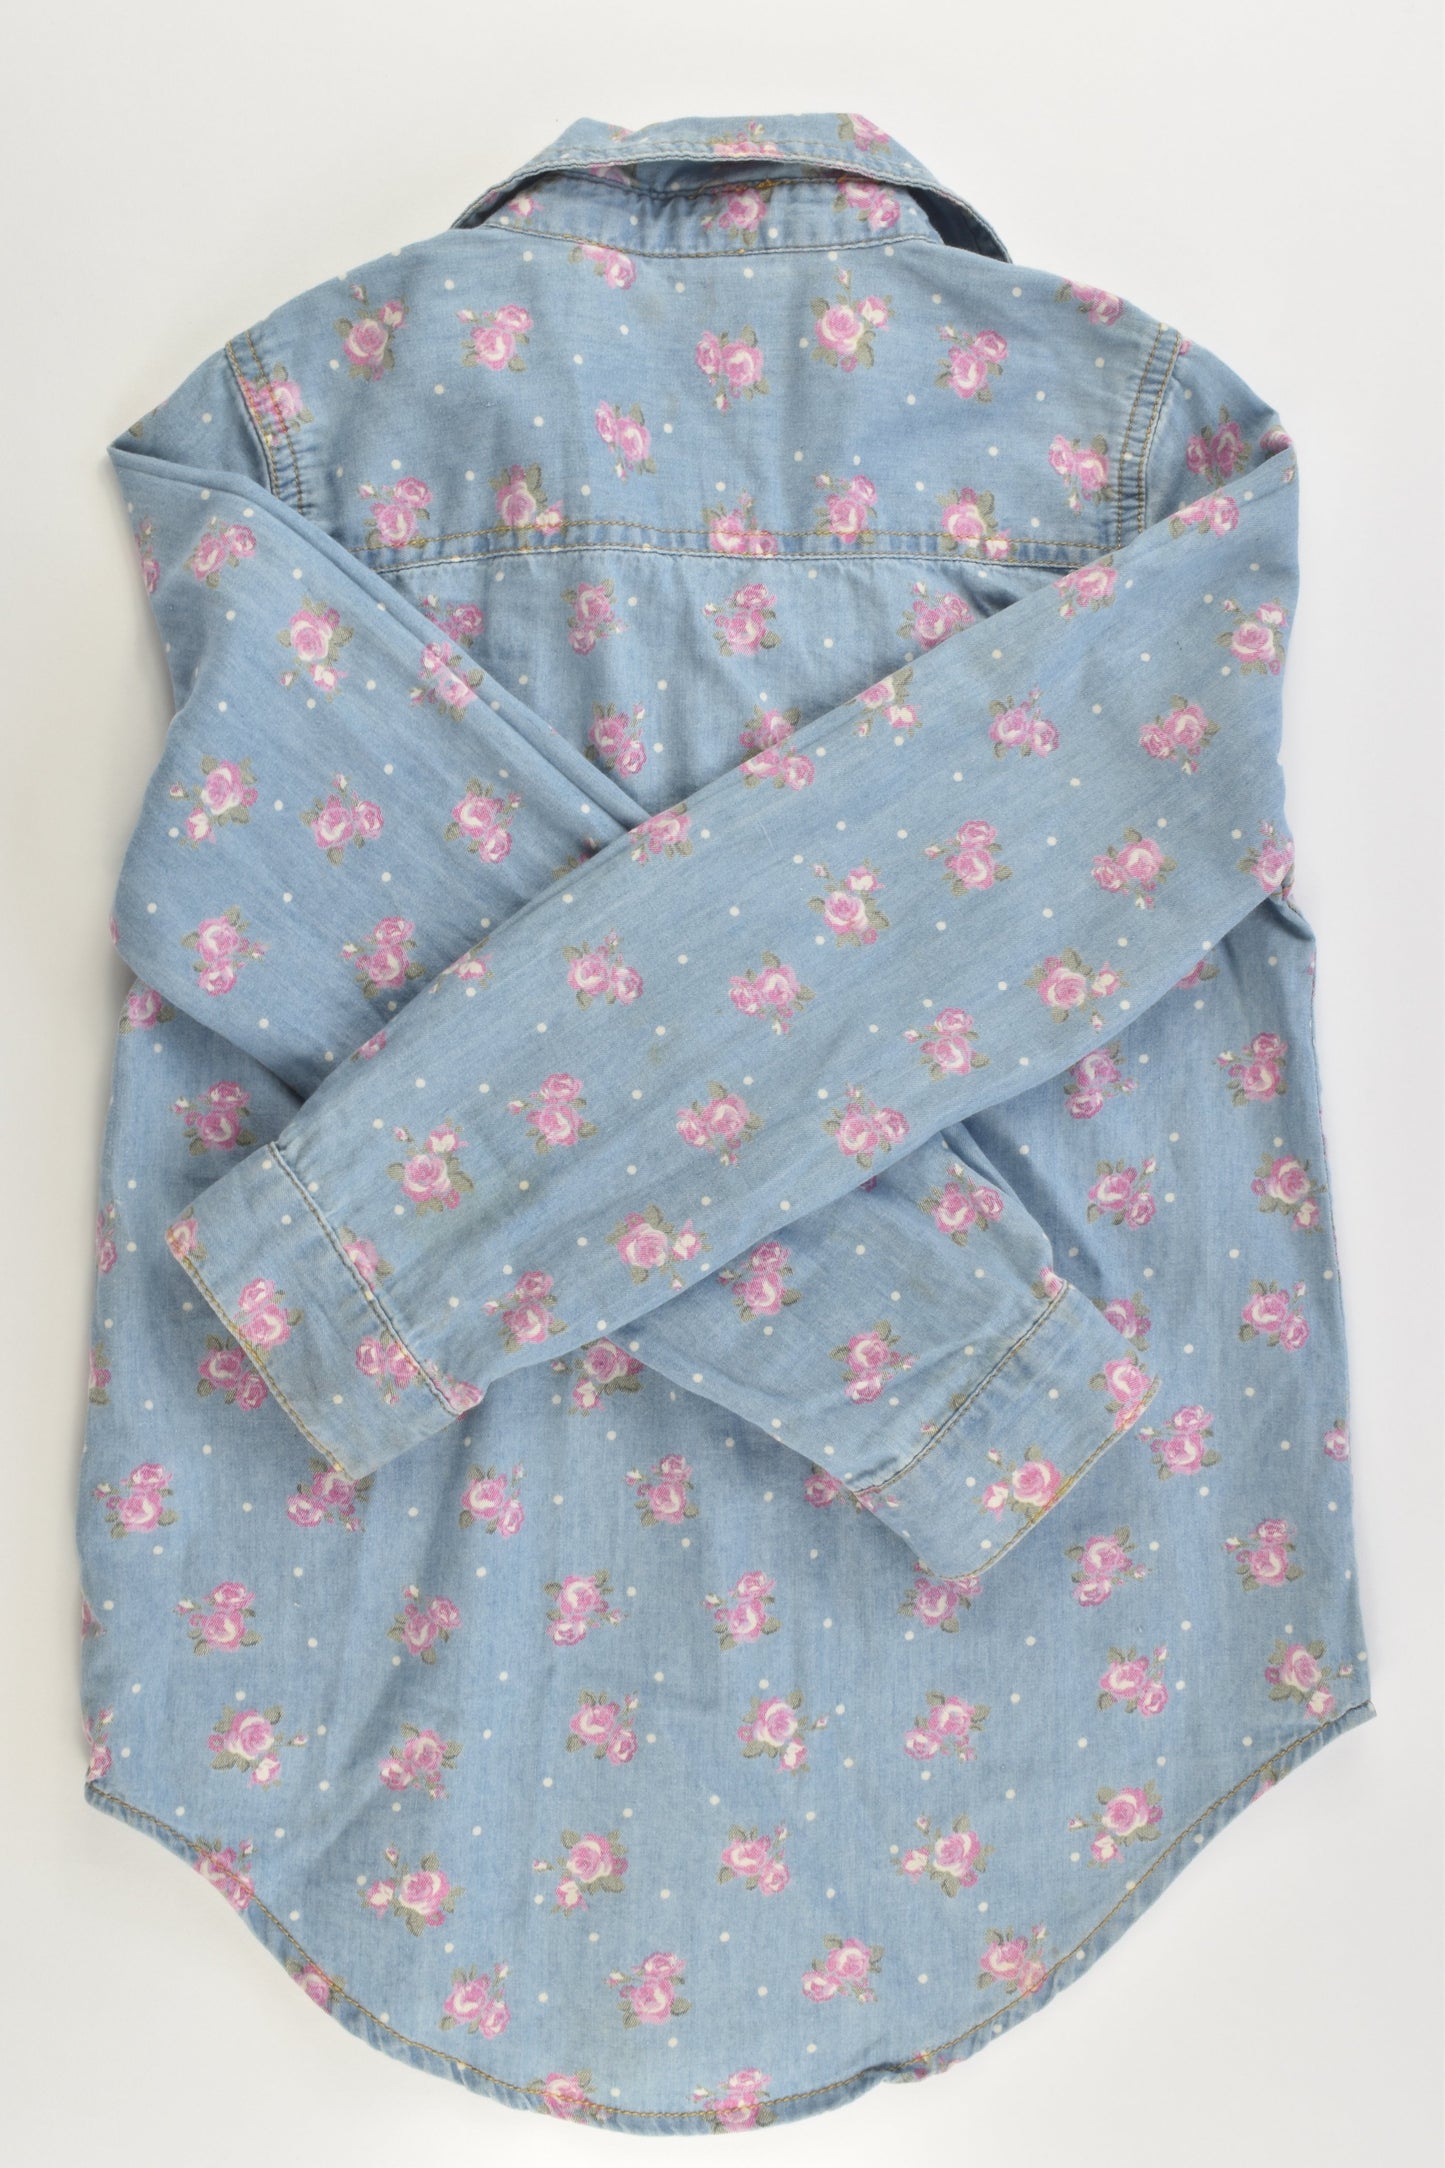 Fun Spirit Size 7 (125 cm) Lightweight Floral Denim Shirt